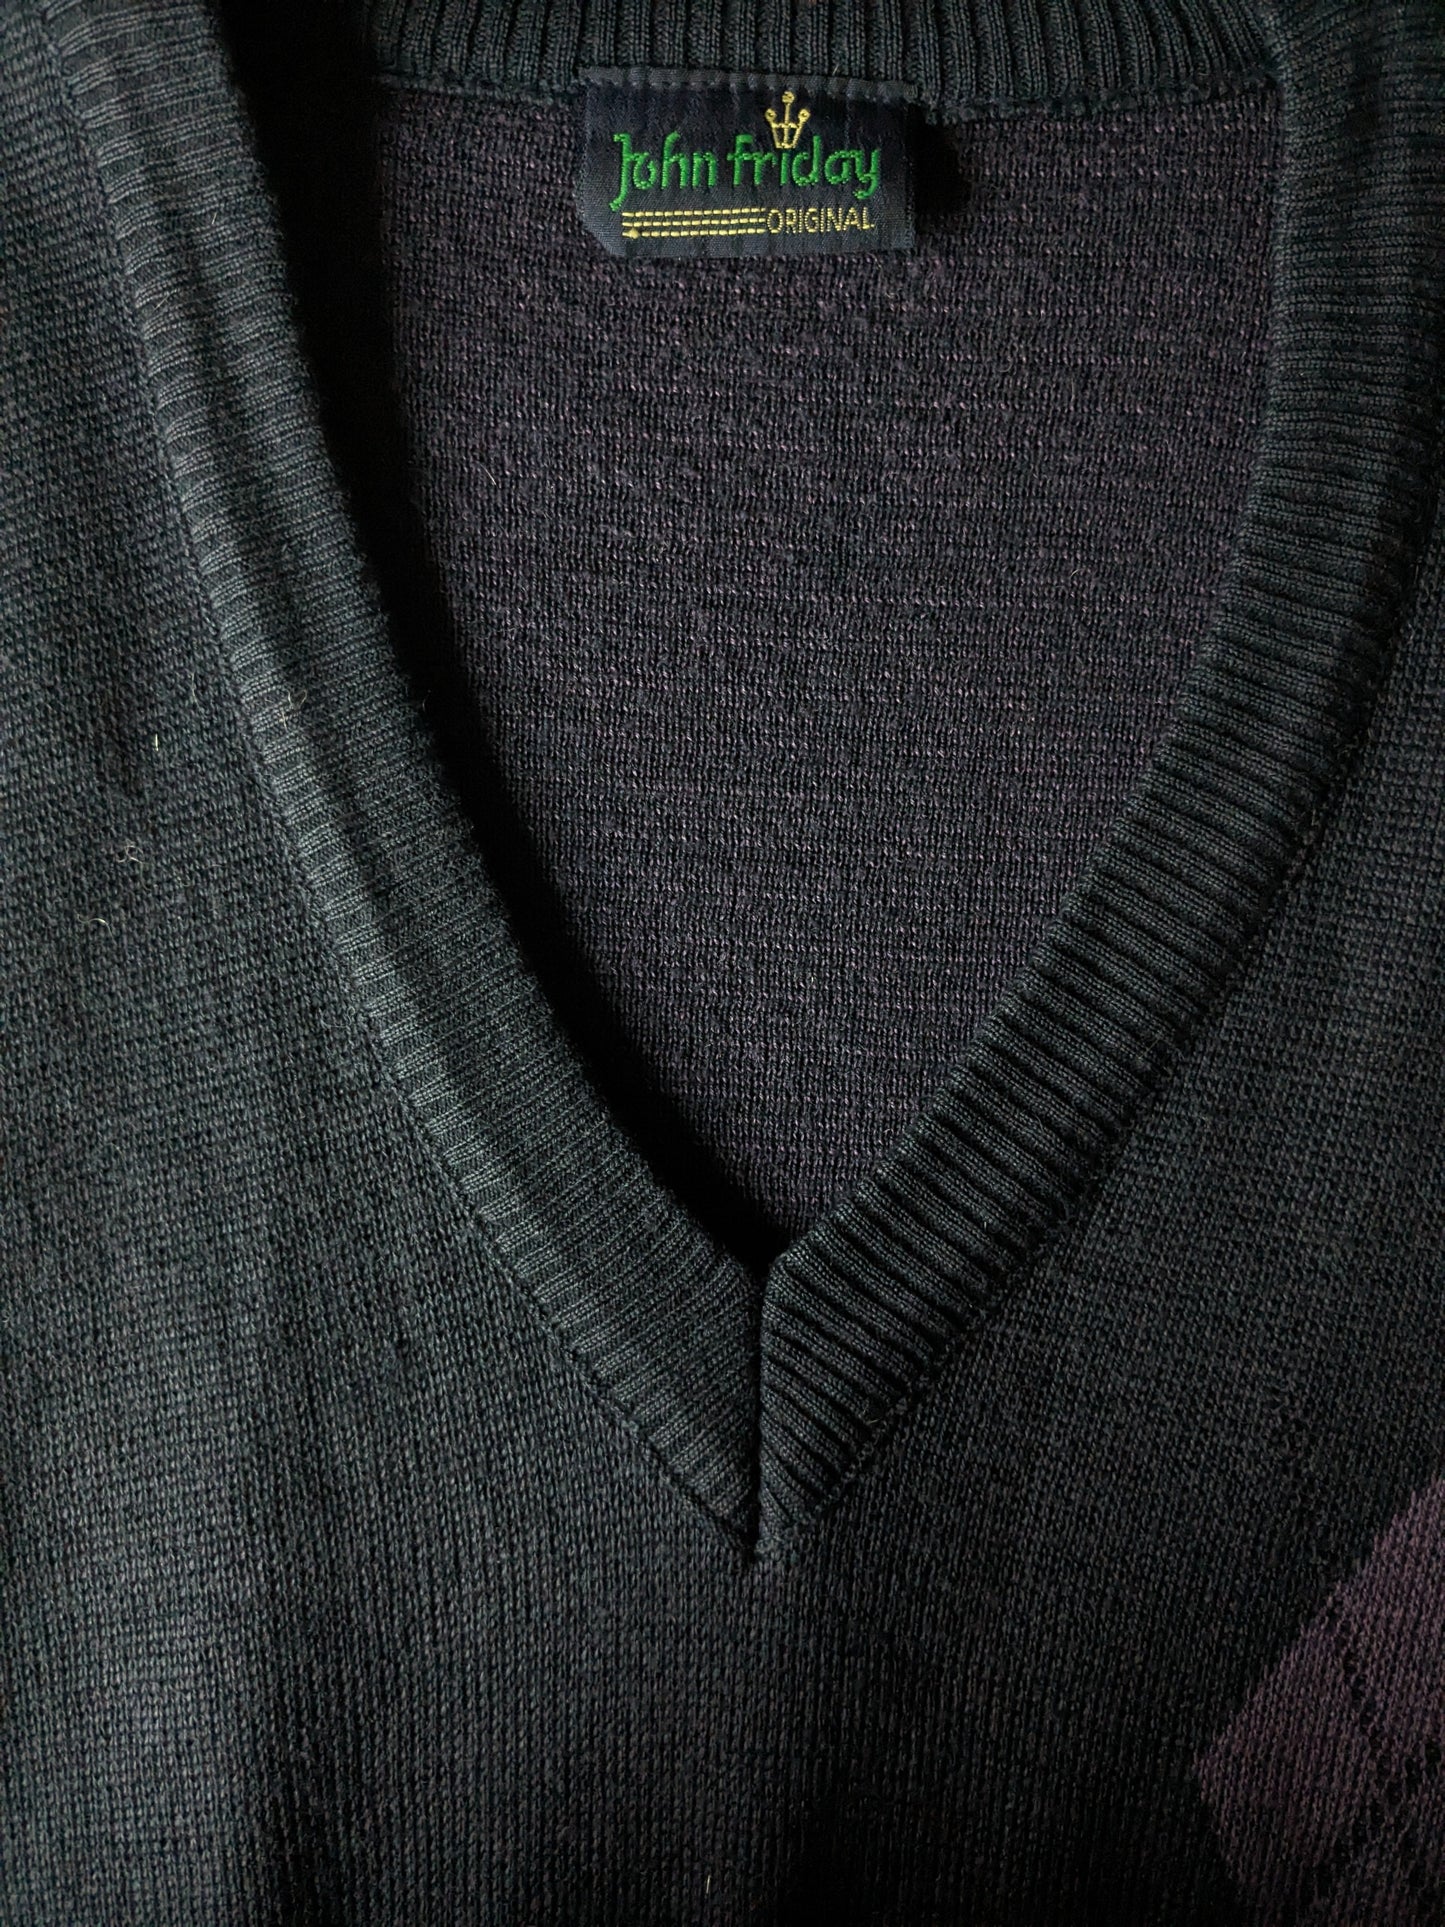 Vintage John Friday Spencer. Color púrpura oscuro. Tamaño S. 50% de lana.